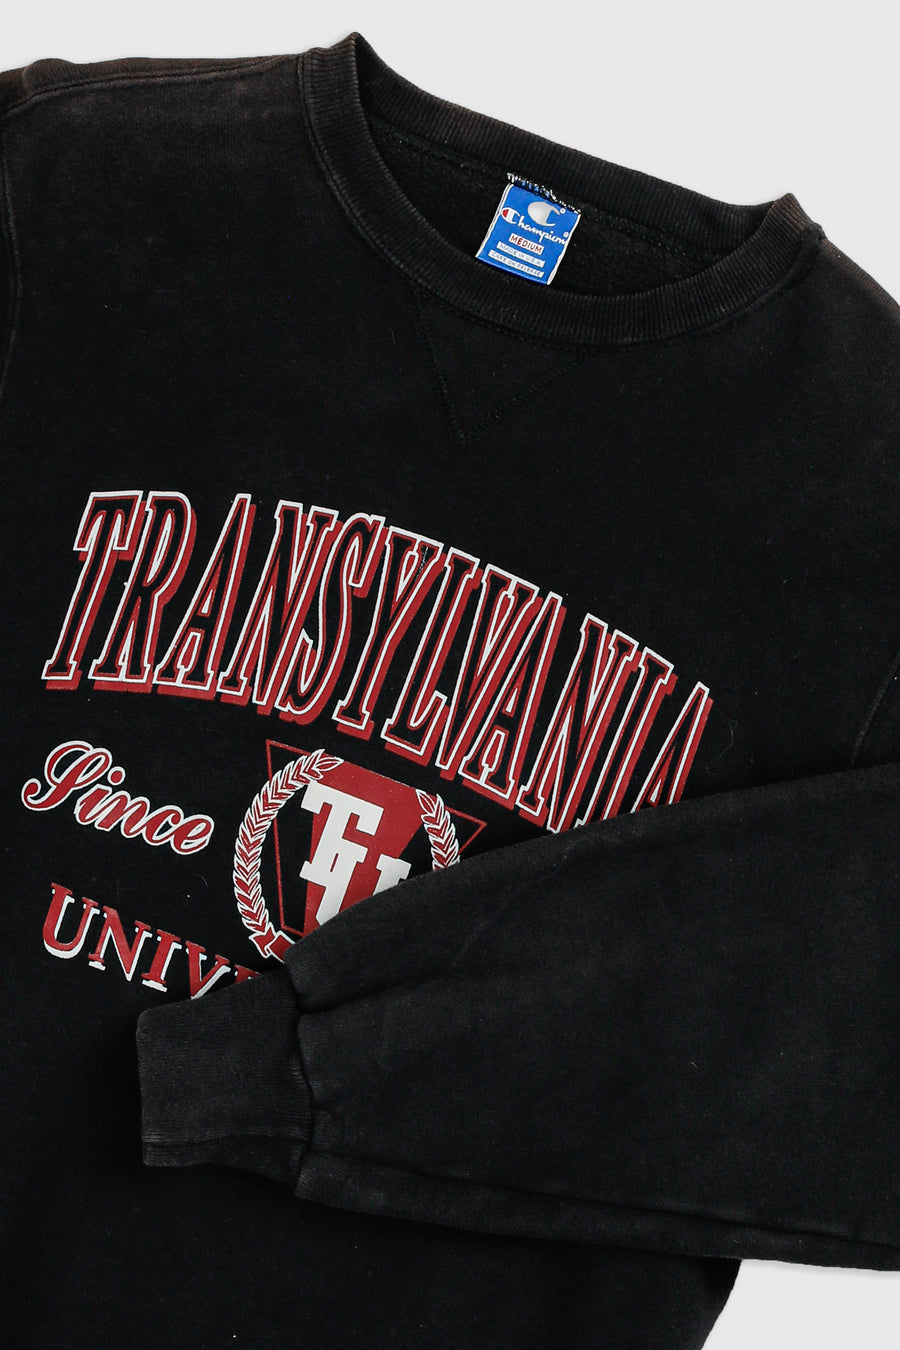 Vintage Transylvania Sweatshirt - M